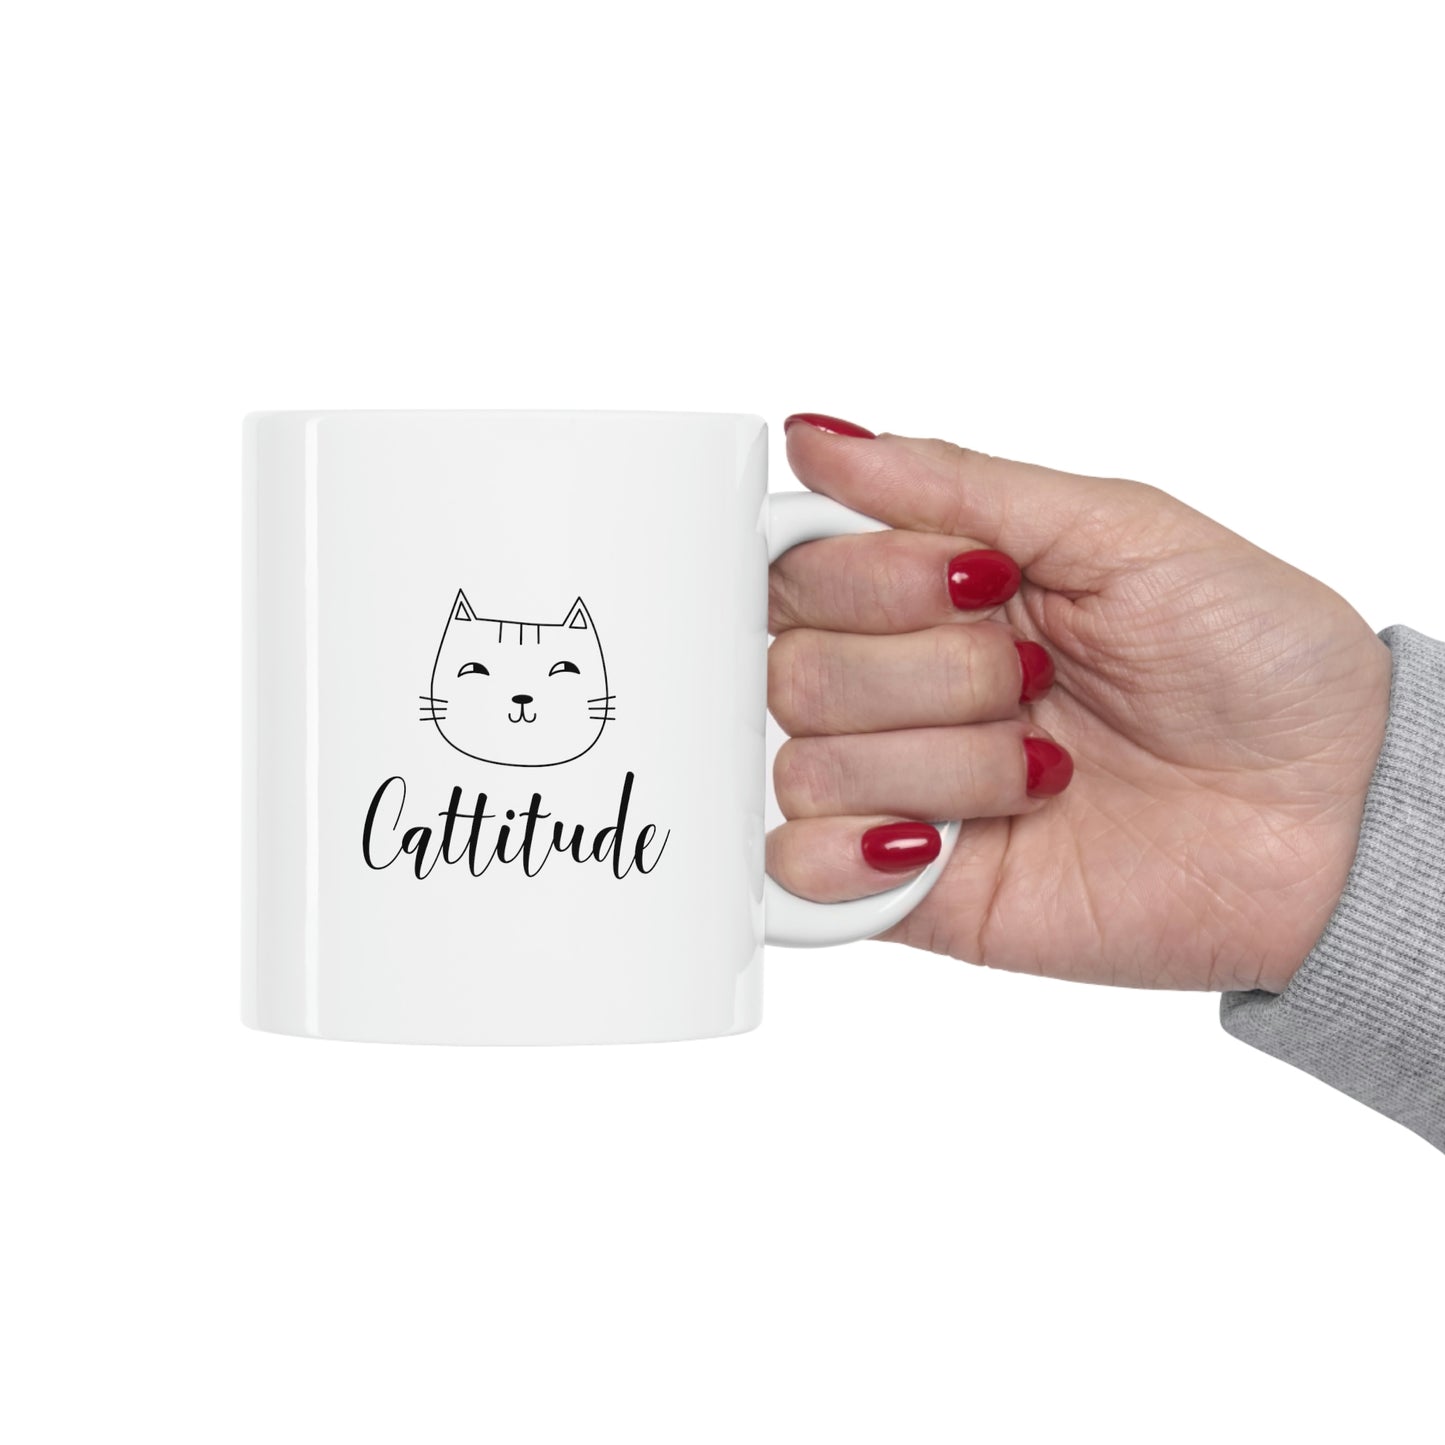 Cattitude Cat Lover Ceramic Coffee Mug 11oz